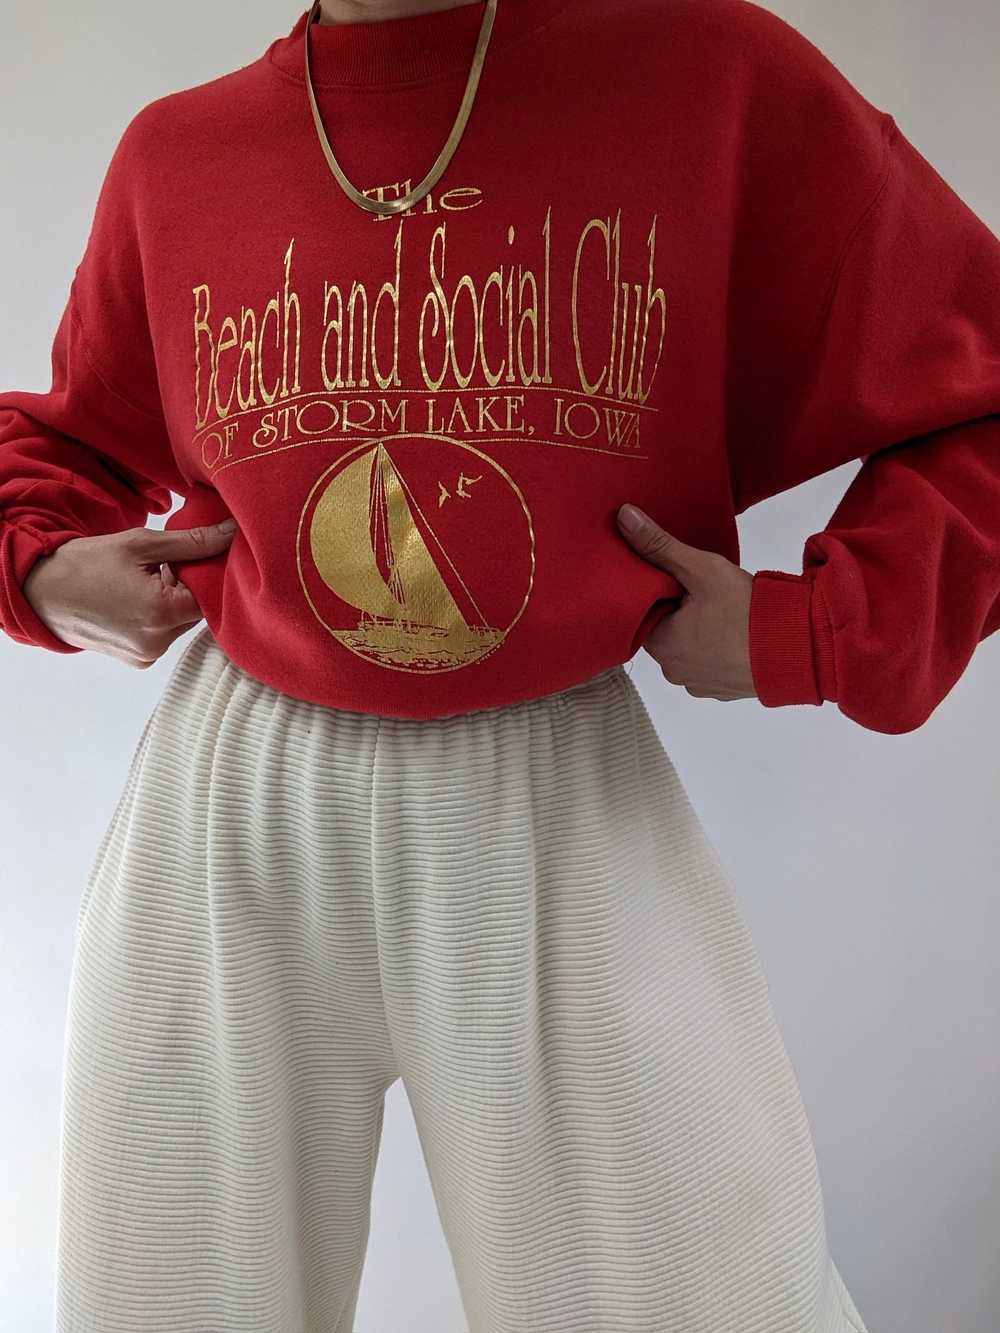 Vintage "Beach Club" Gold Foil Sweatshirt - image 4